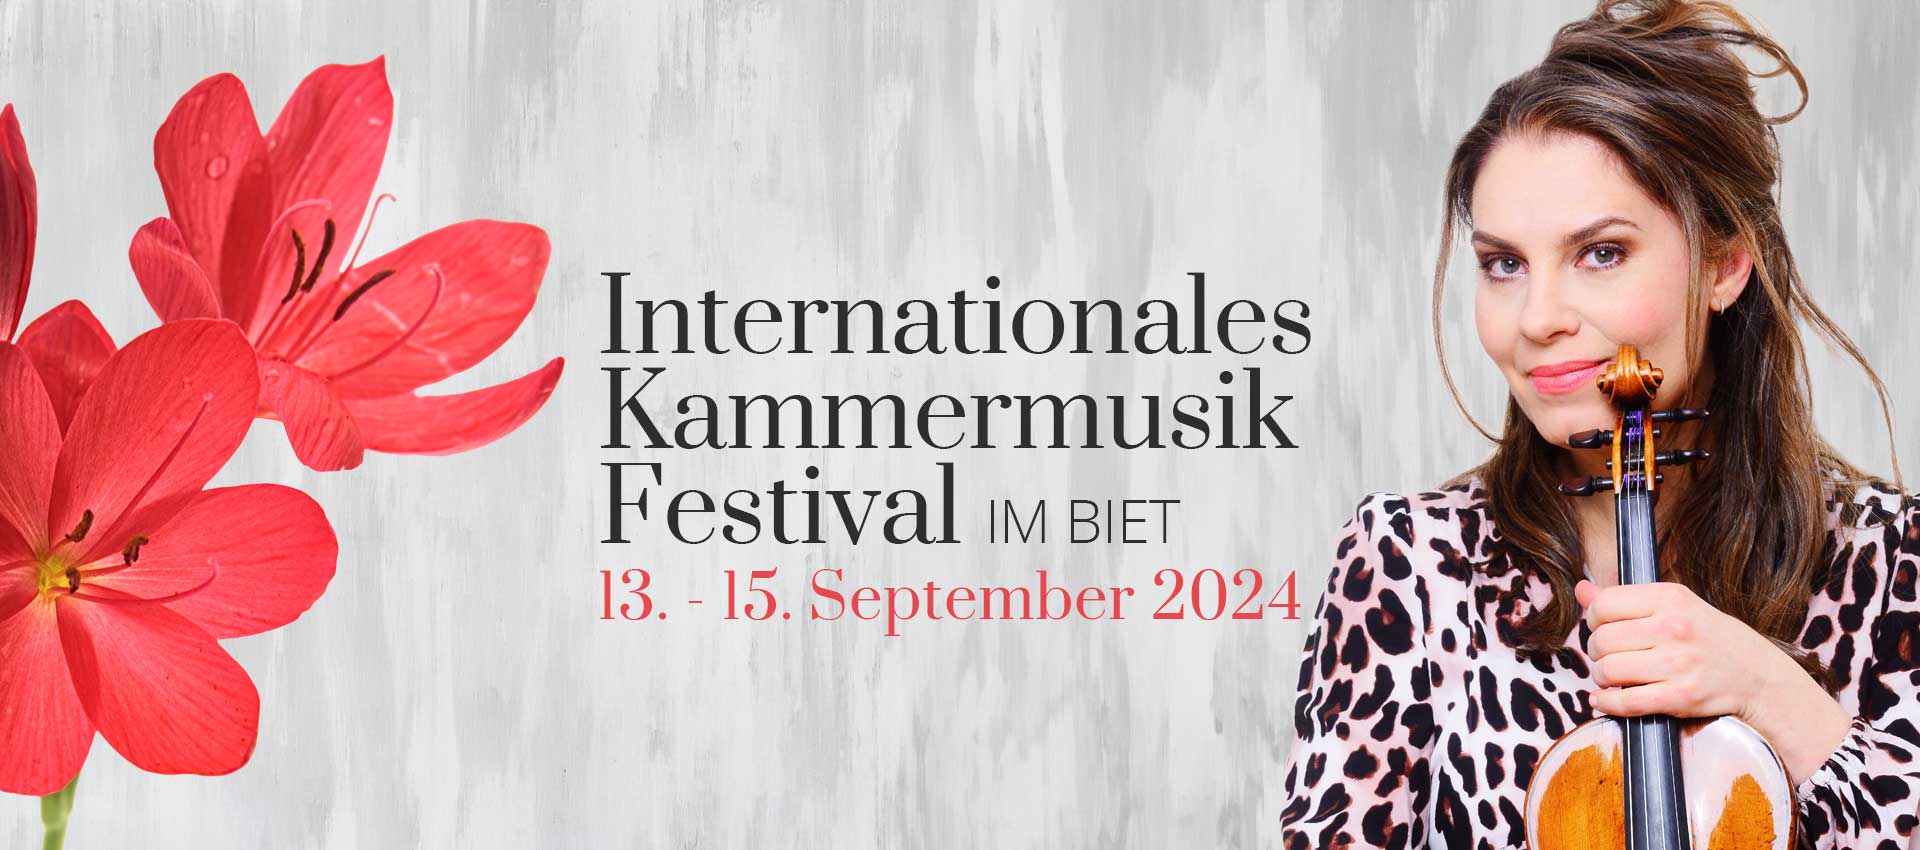 Internationales Kammermusik Festival 2024 